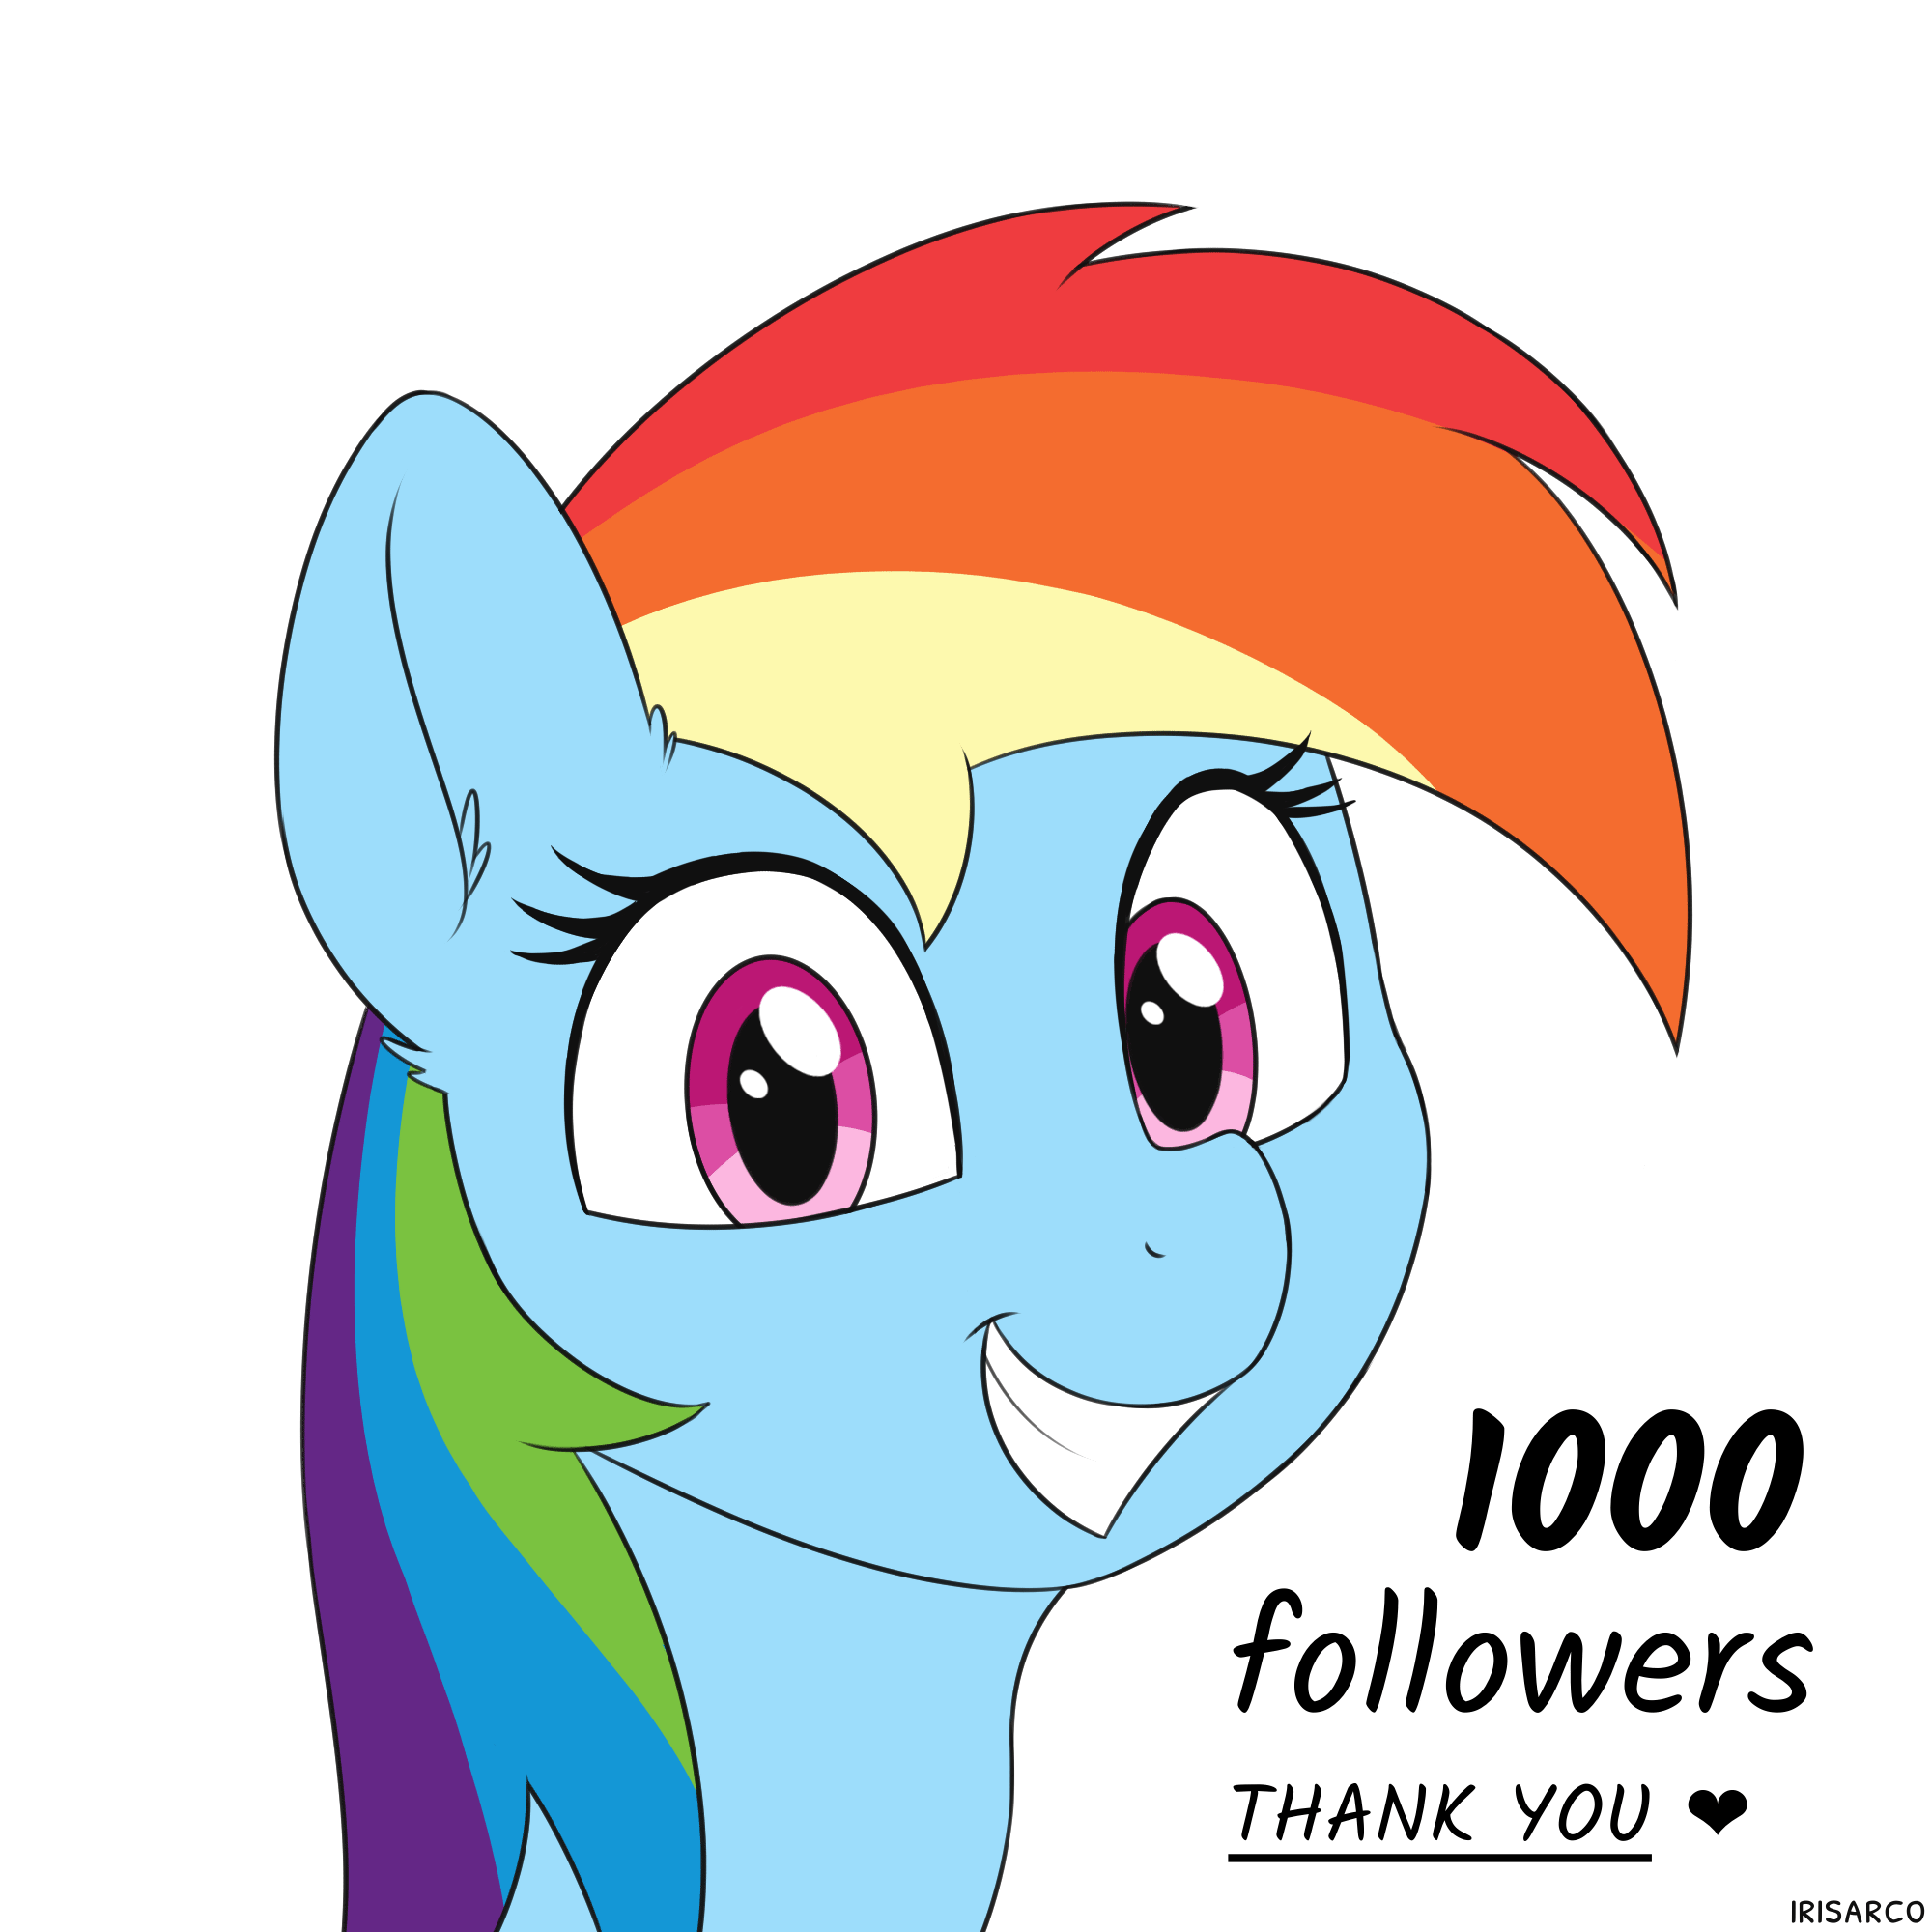 1000 followers, thanks! (1/1)